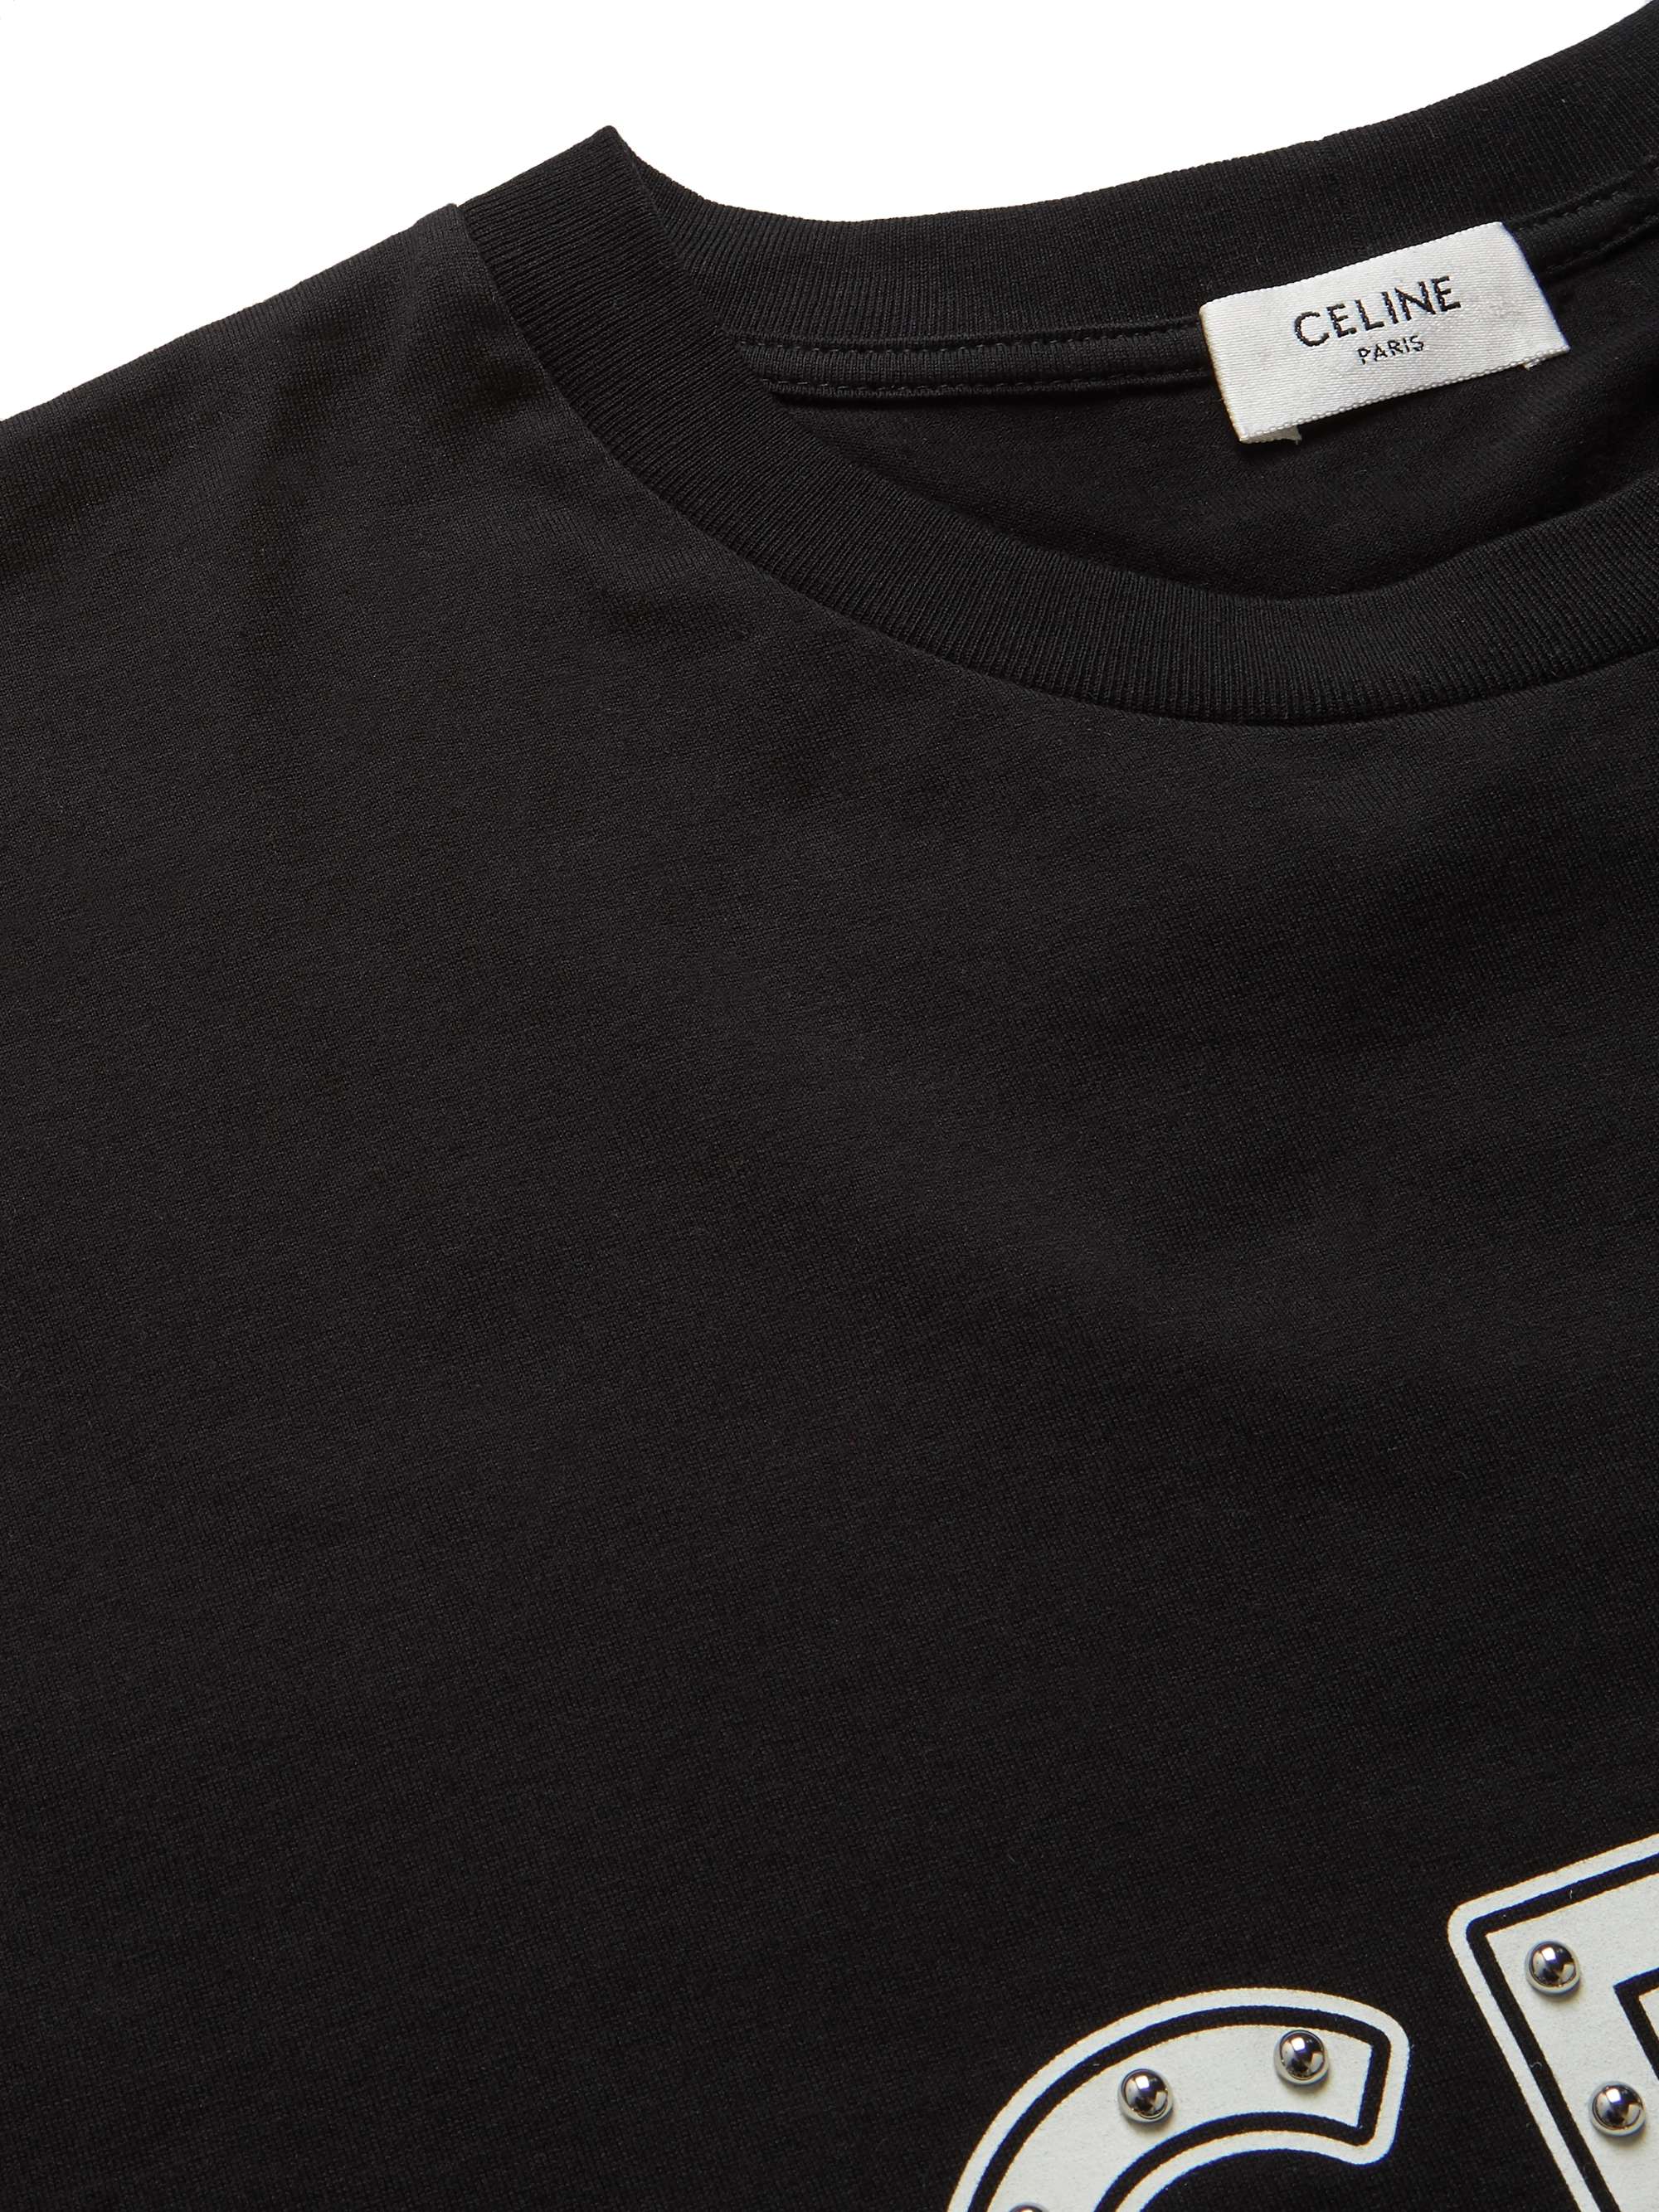 CELINE HOMME Studded Logo-Print Cotton-Jersey T-Shirt | MR PORTER